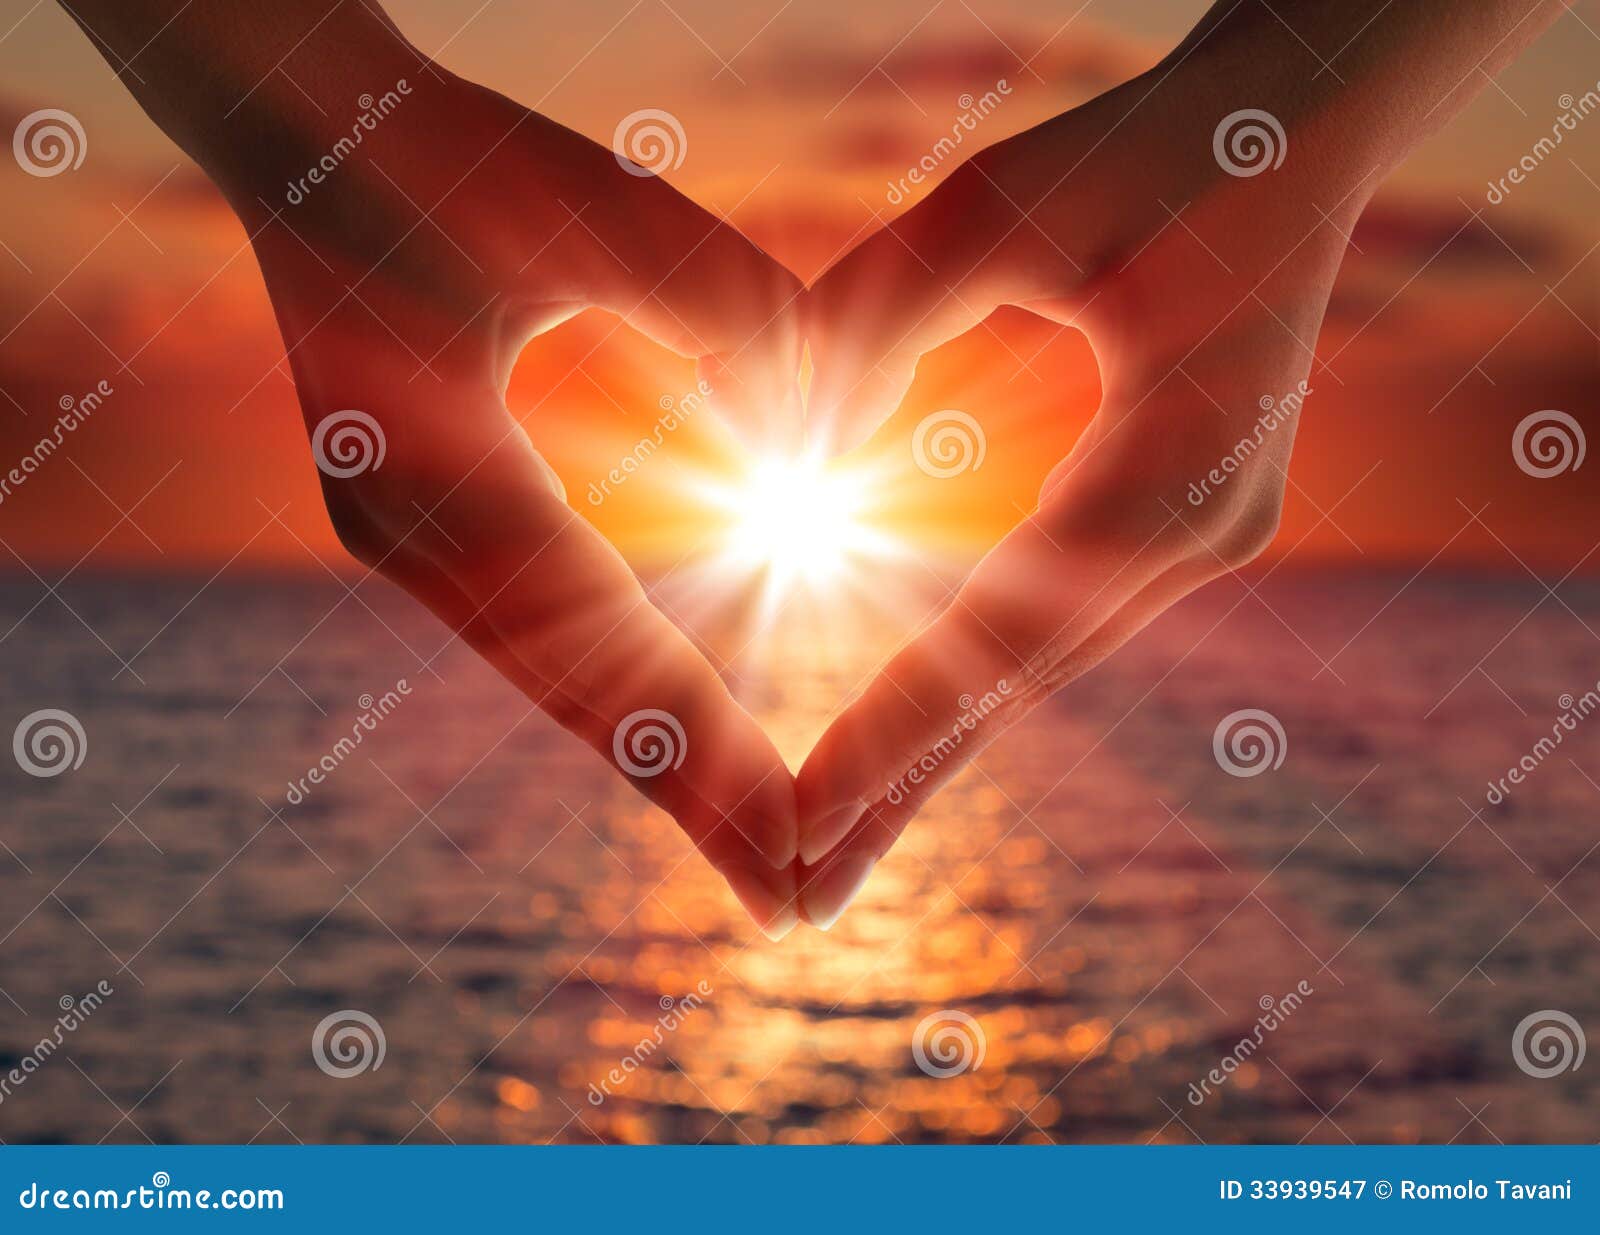 sunset in heart hands